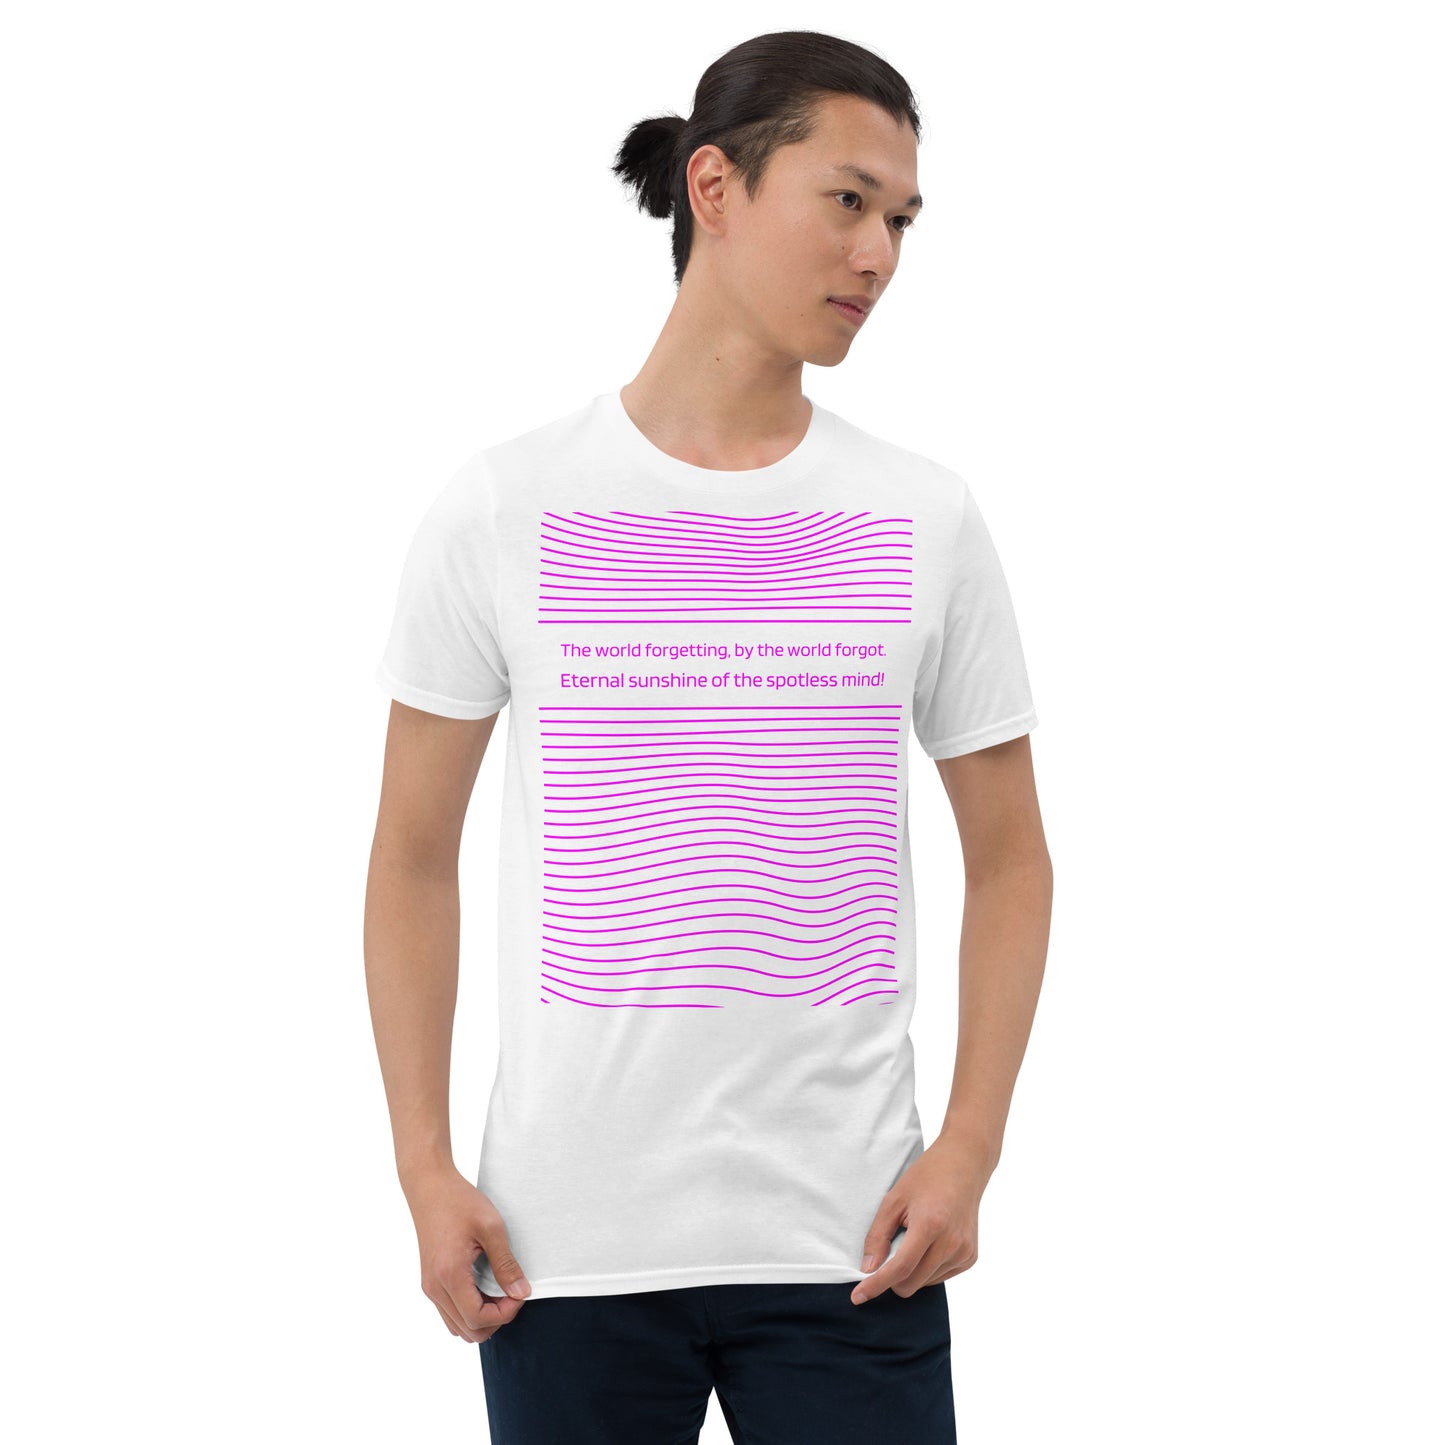 Eternal Sunshine of the Spotless Mind, Short-Sleeve Unisex T-Shirt, Alexander Pope Poem